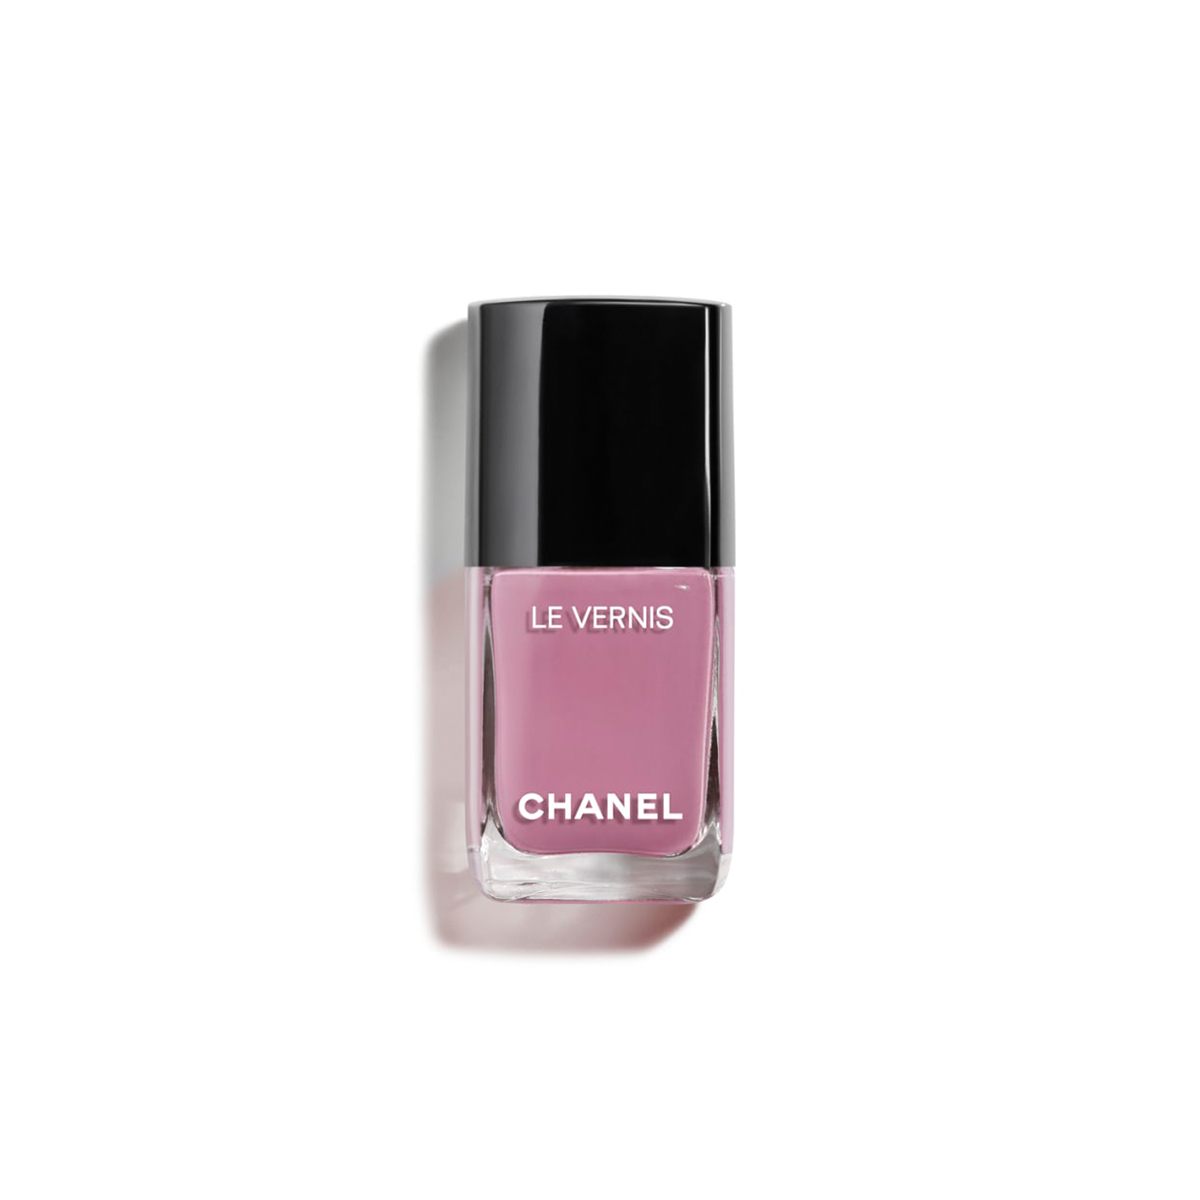 Chanel Le Vernis Longwear köröm színe a Mirage-ban